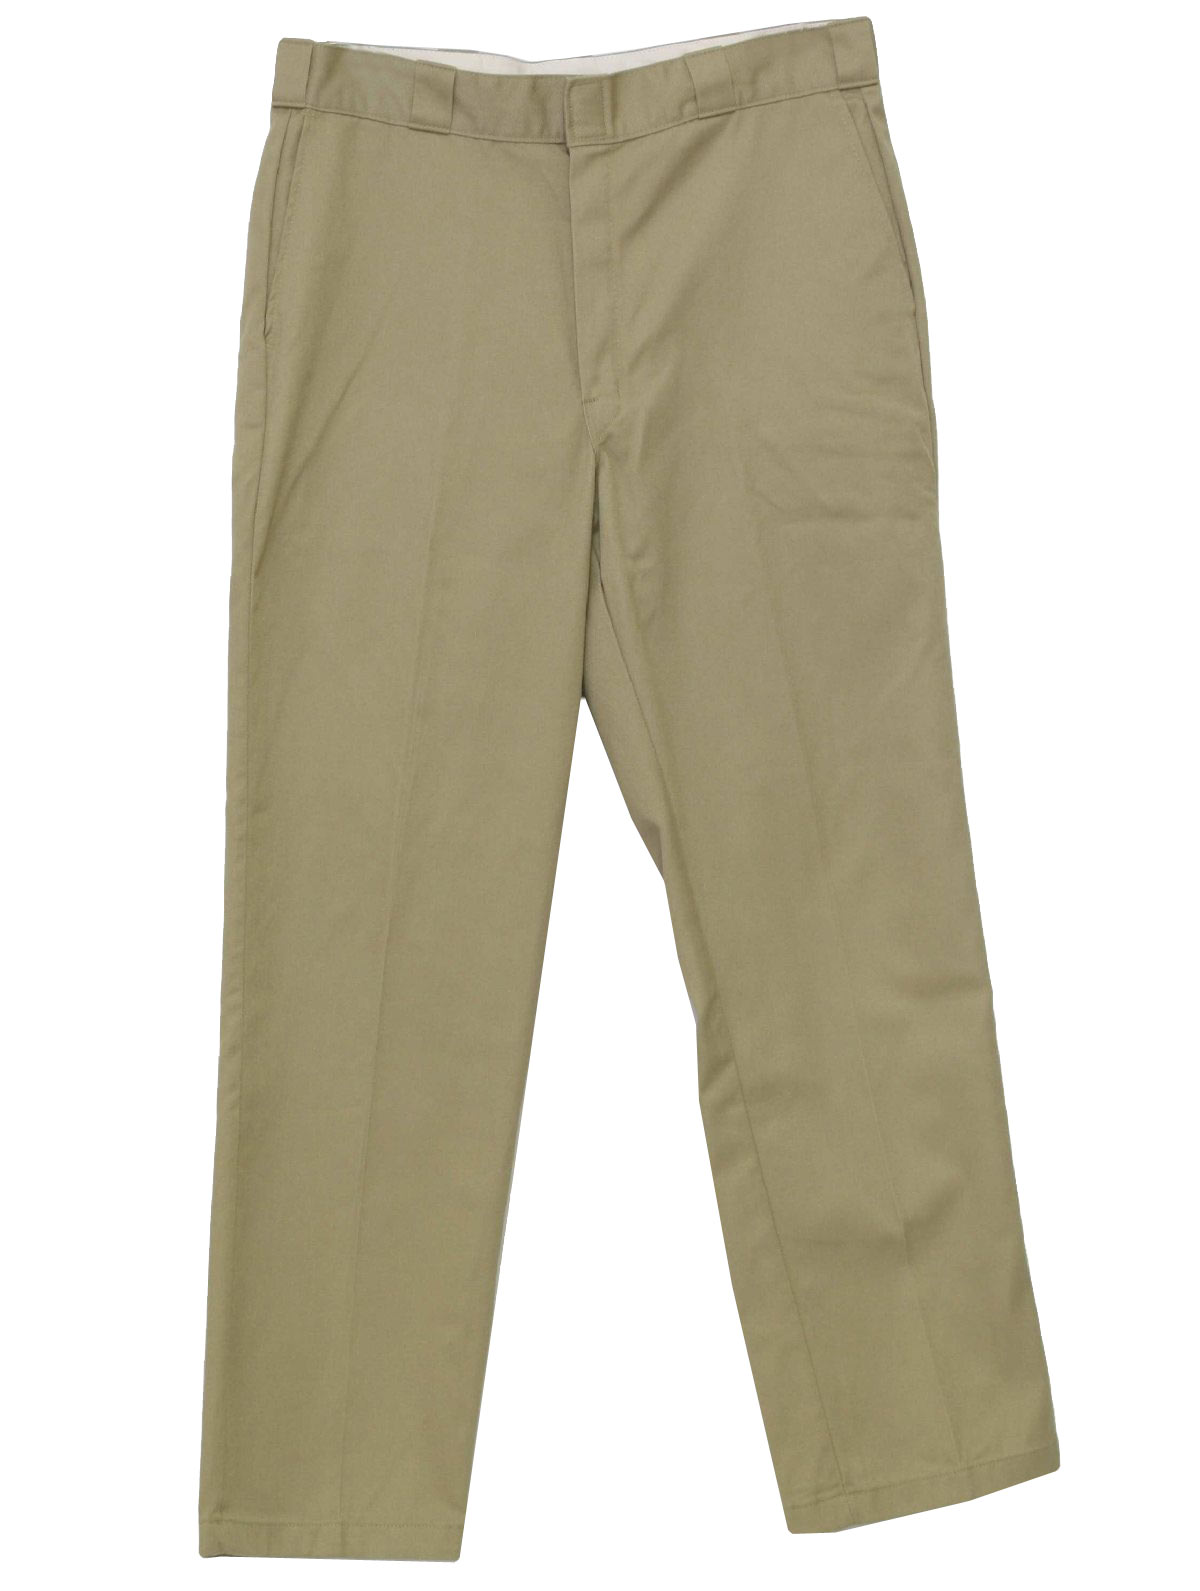 90s Pants (Dickies): 90s -Dickies- Mens tan cotton polyester blend